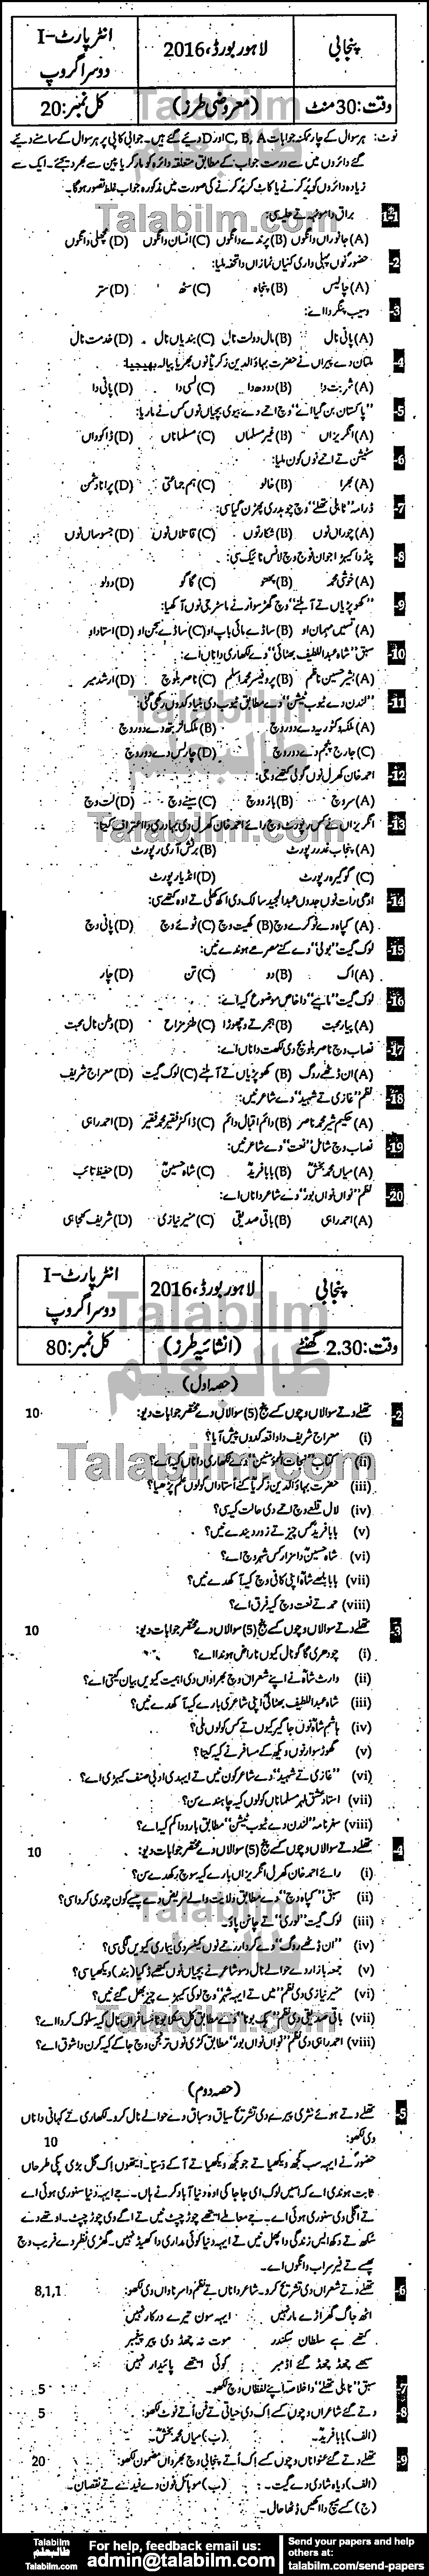 Punjabi 0 past paper for Group-II 2016